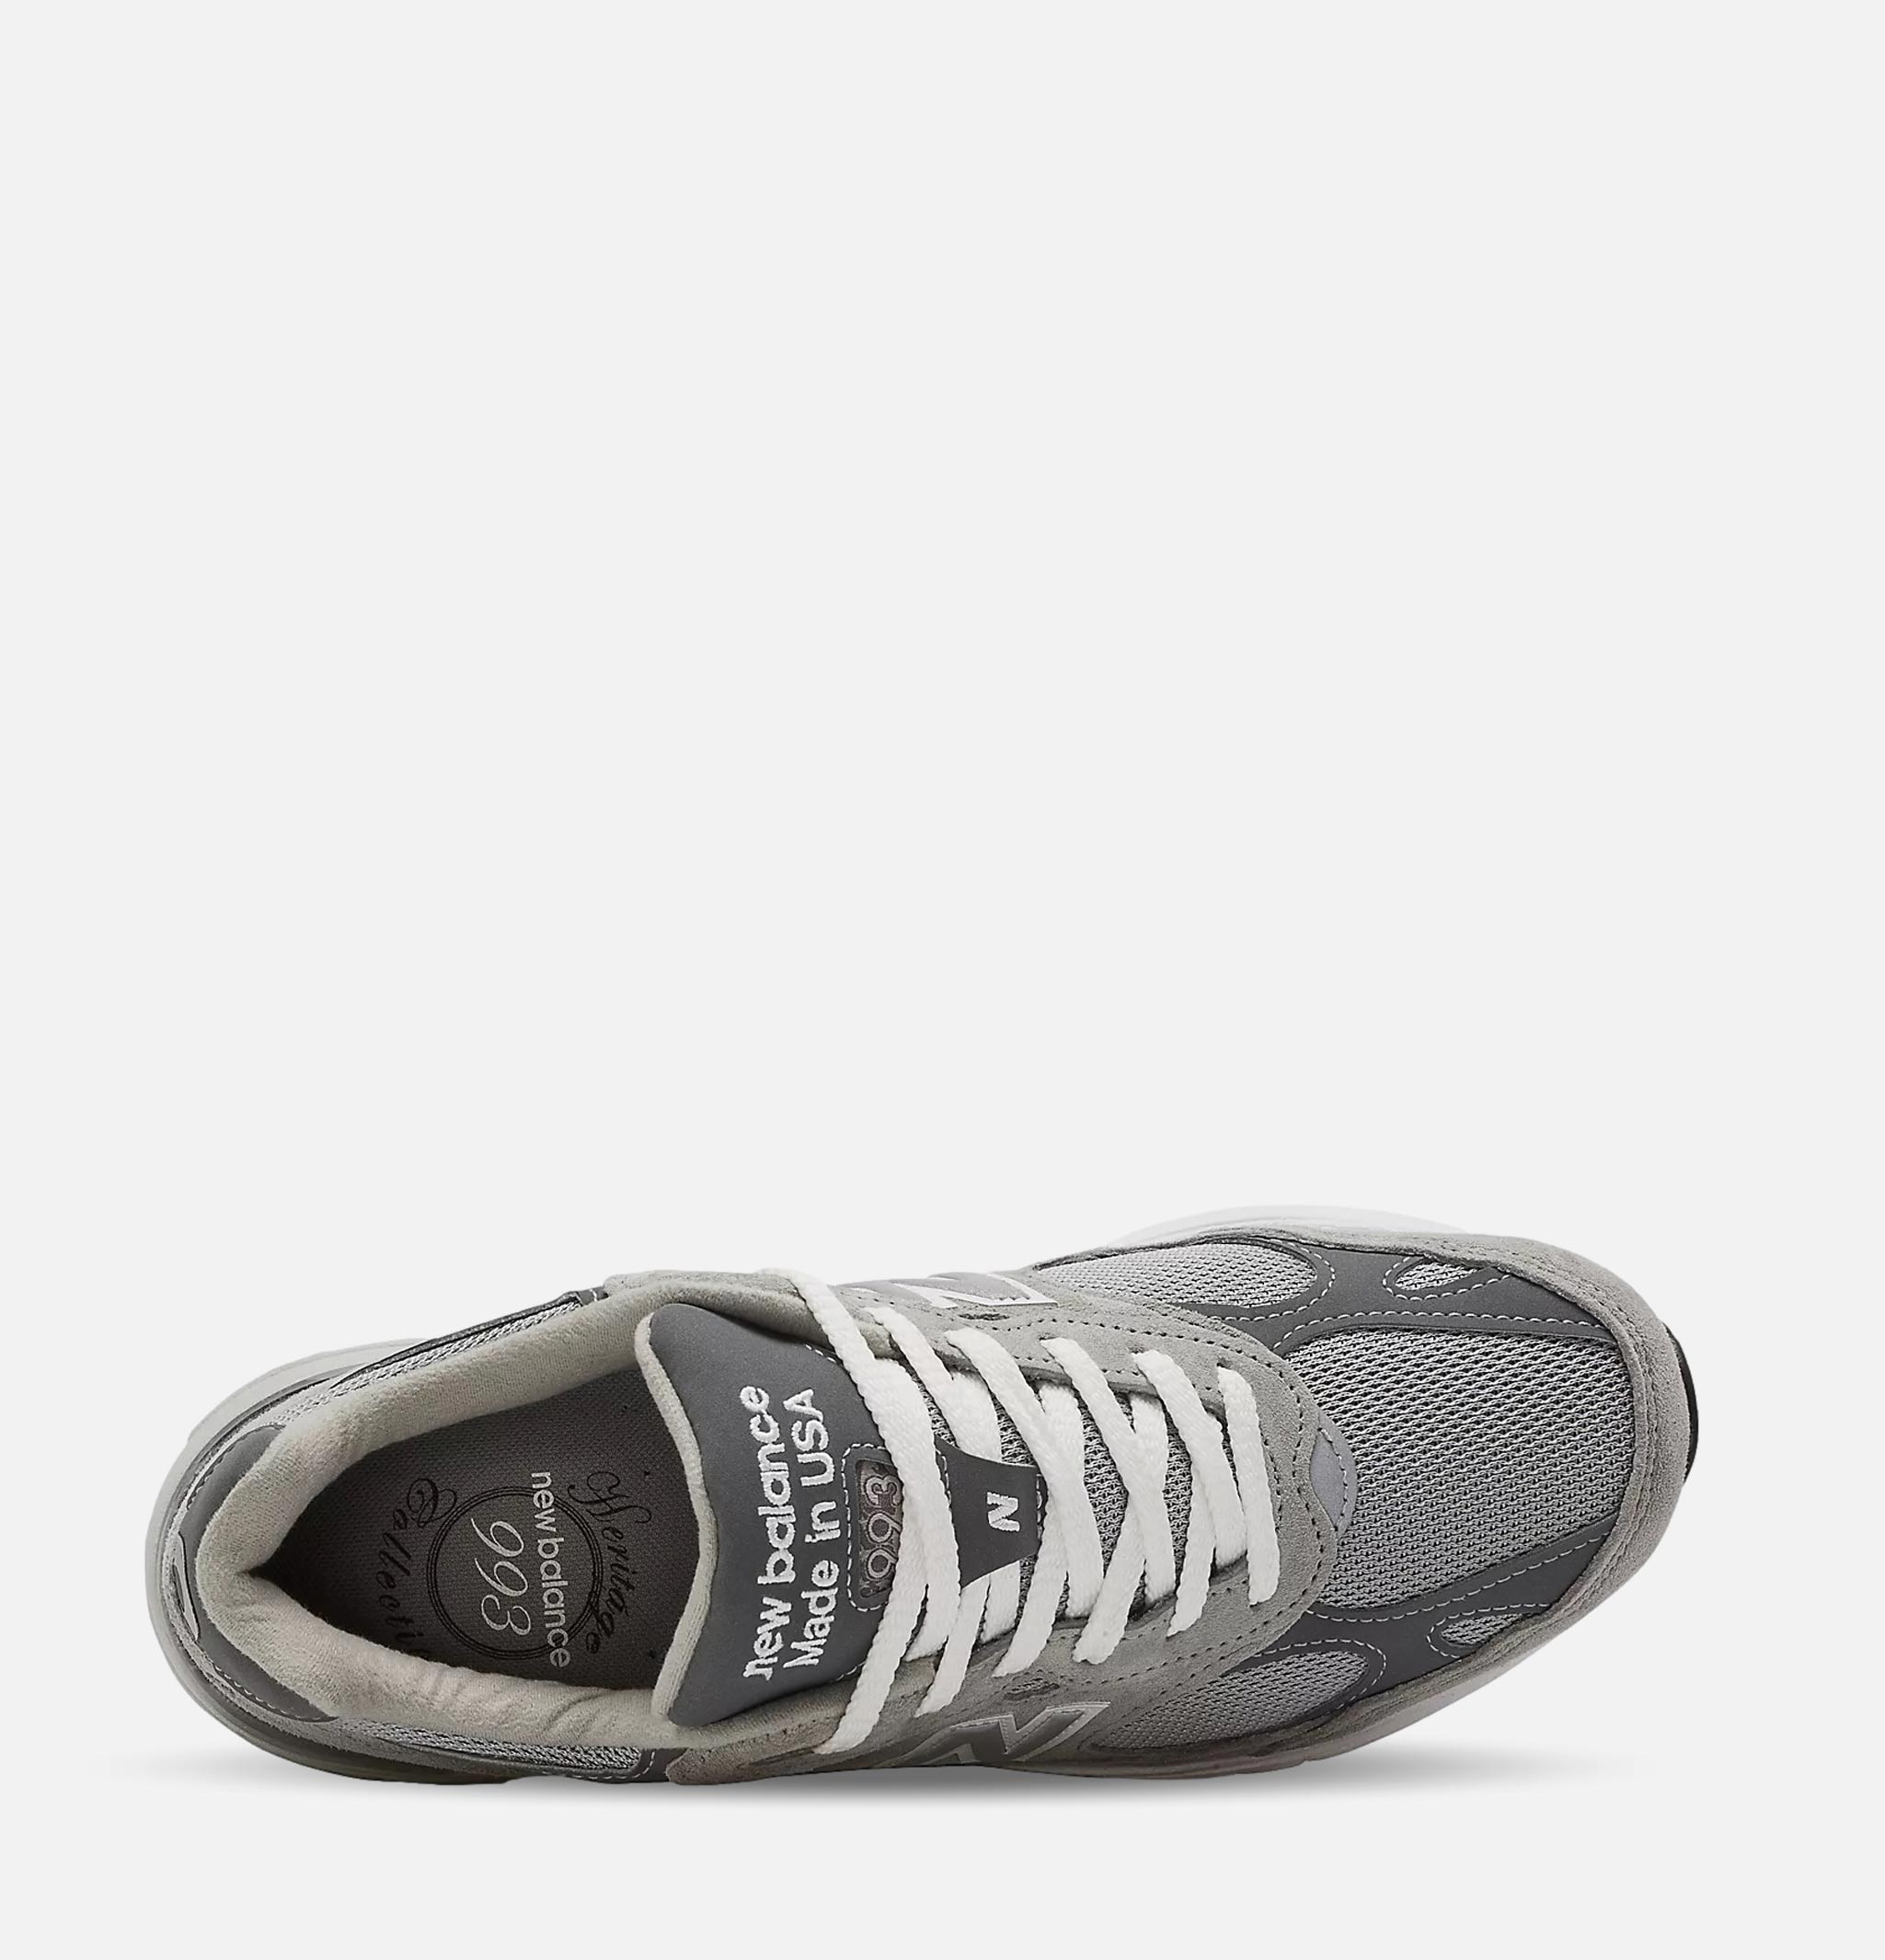 New Balance 993 Grey Sneakers